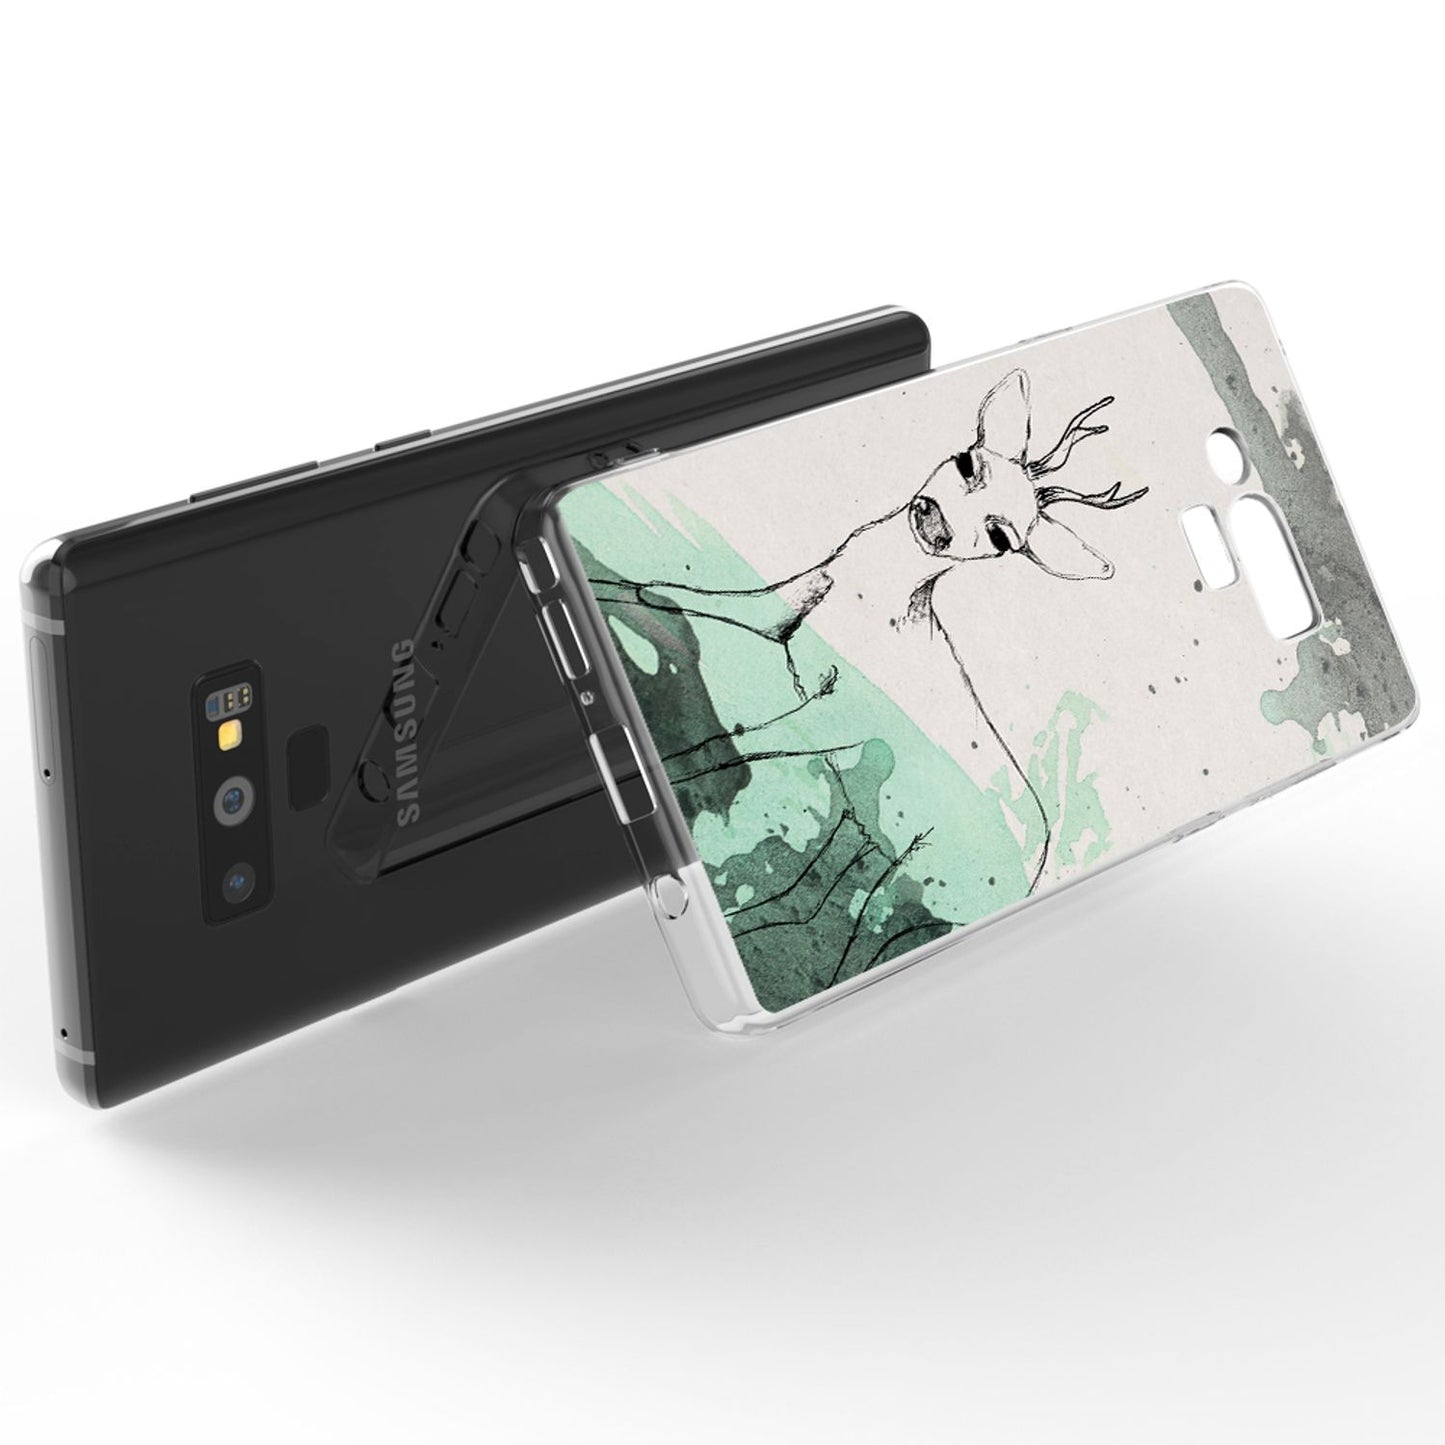 NALIA Hülle für Samsung Galaxy Note 9, Slim Handyhülle Motiv Silikon Case Cover